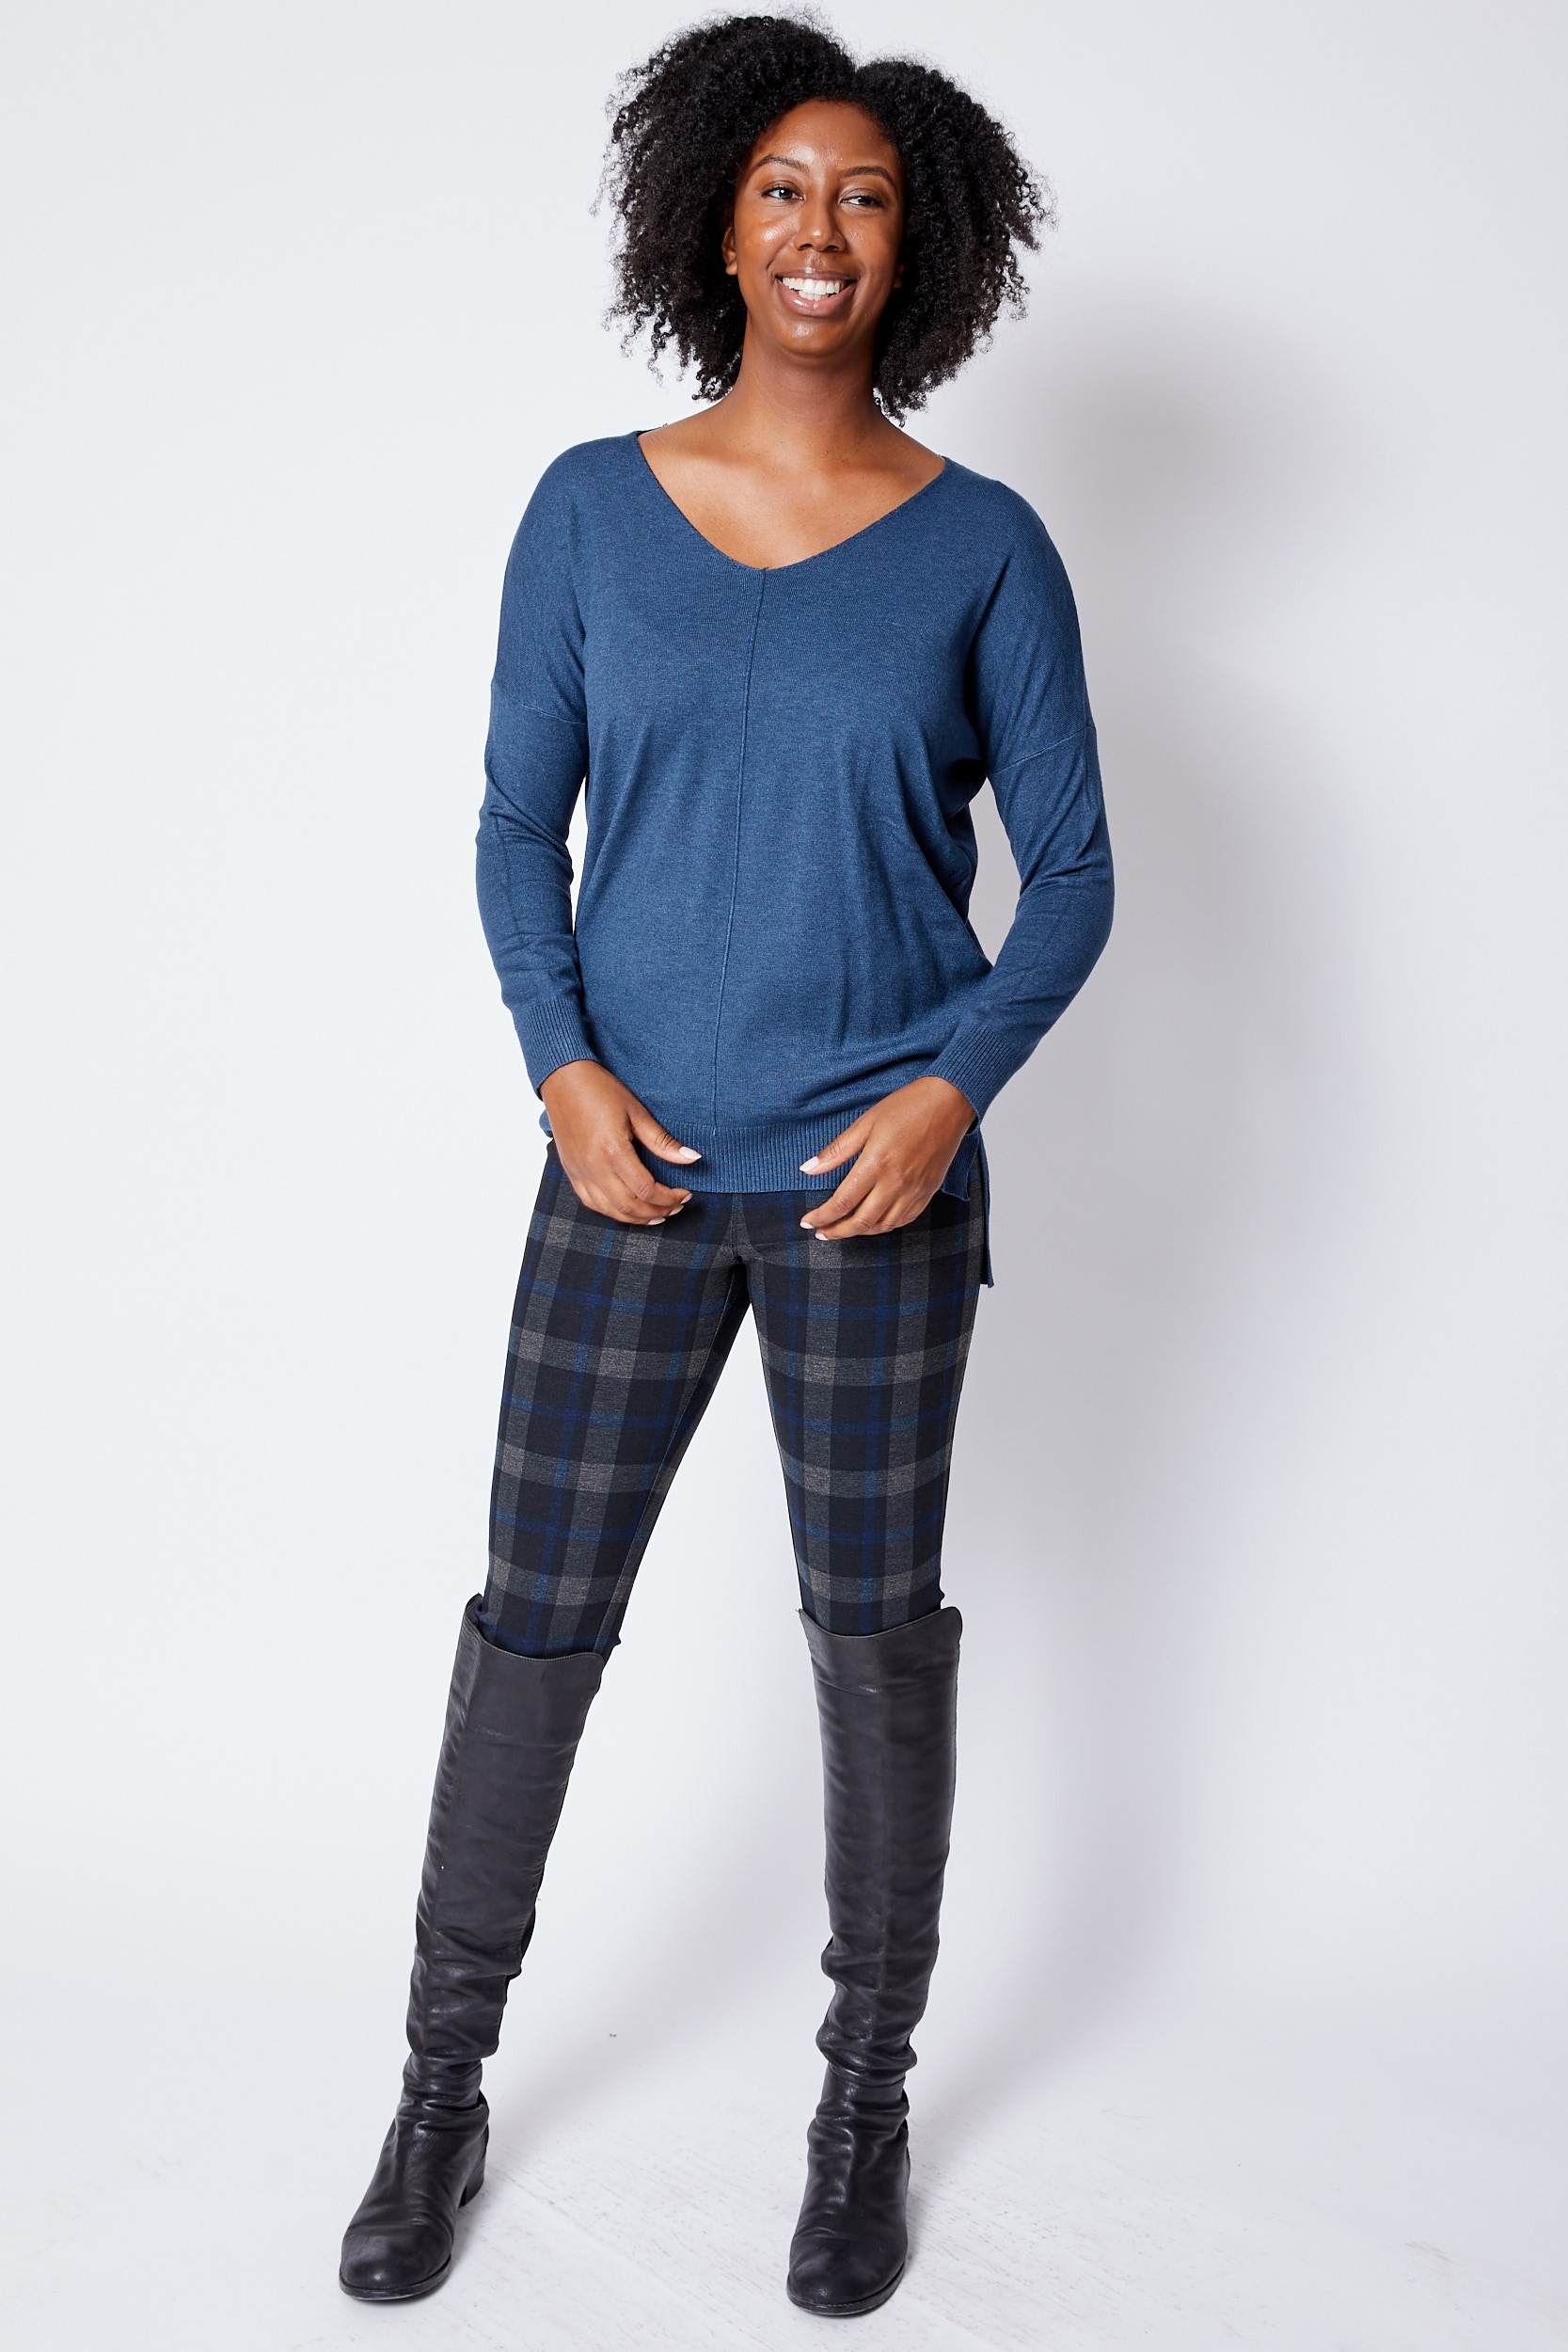 Pattern Legging Blue Check - Jacqueline B Clothing